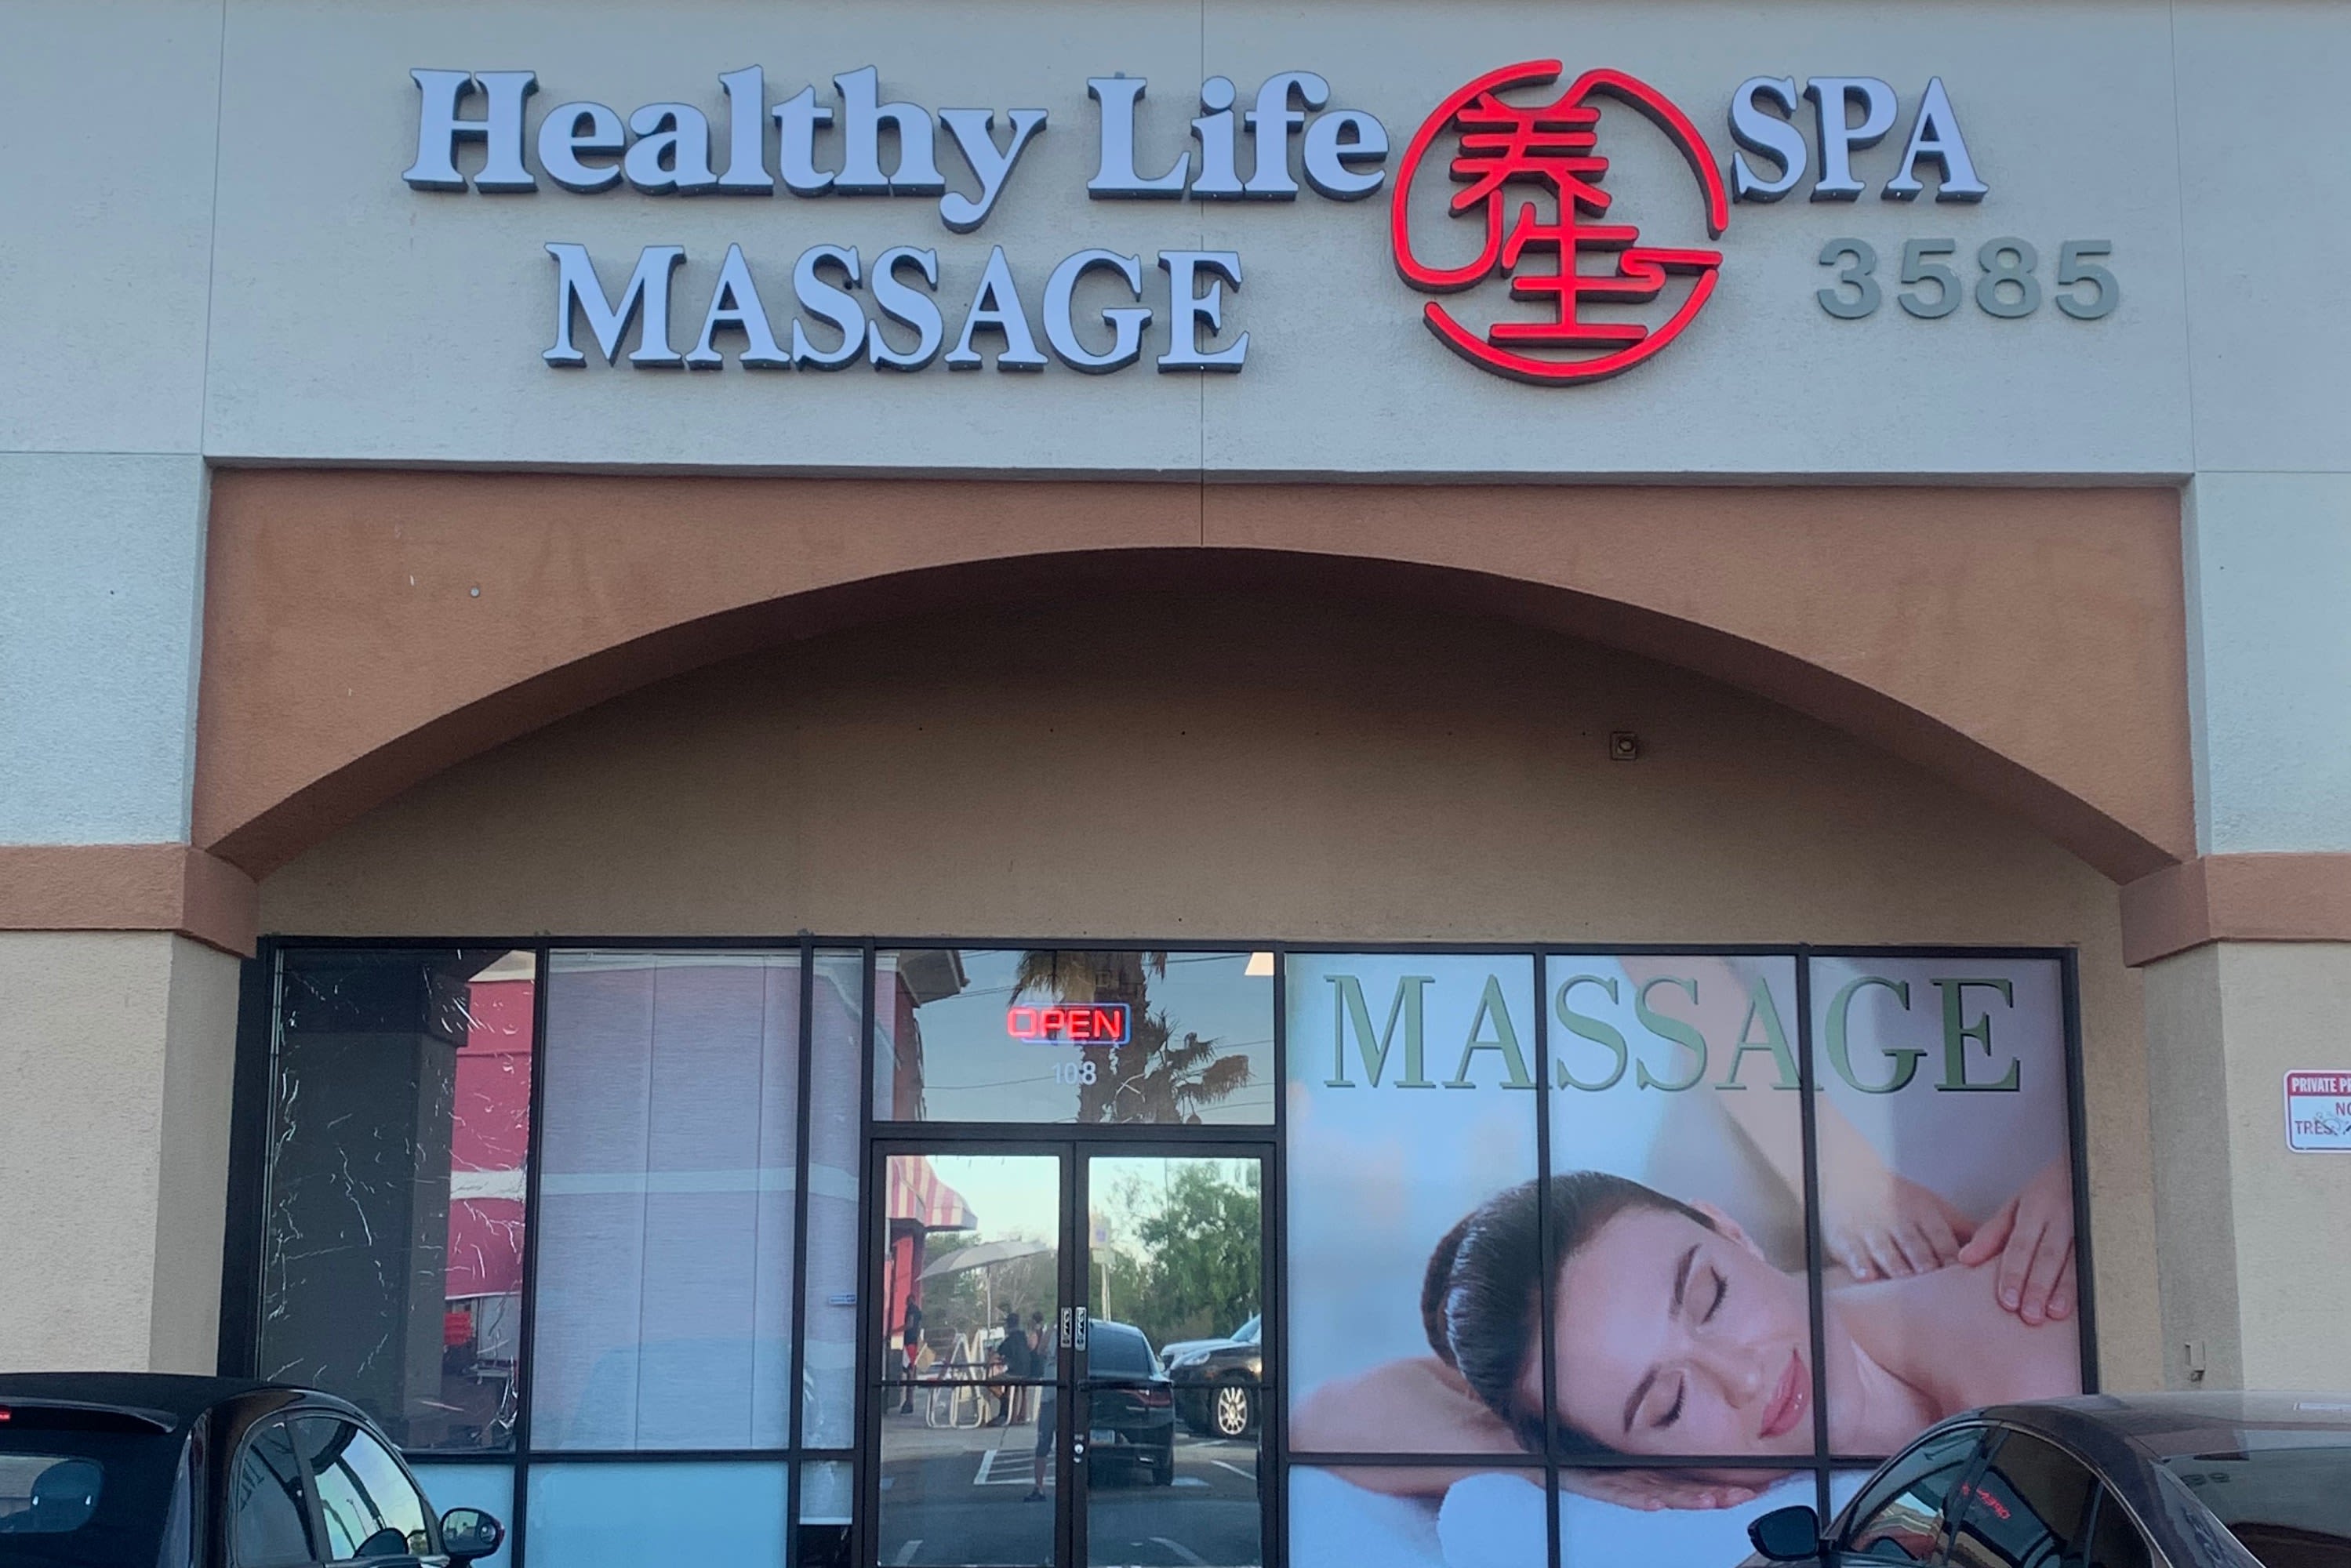 courtney steinberg recommends las vegas massage parlors pic